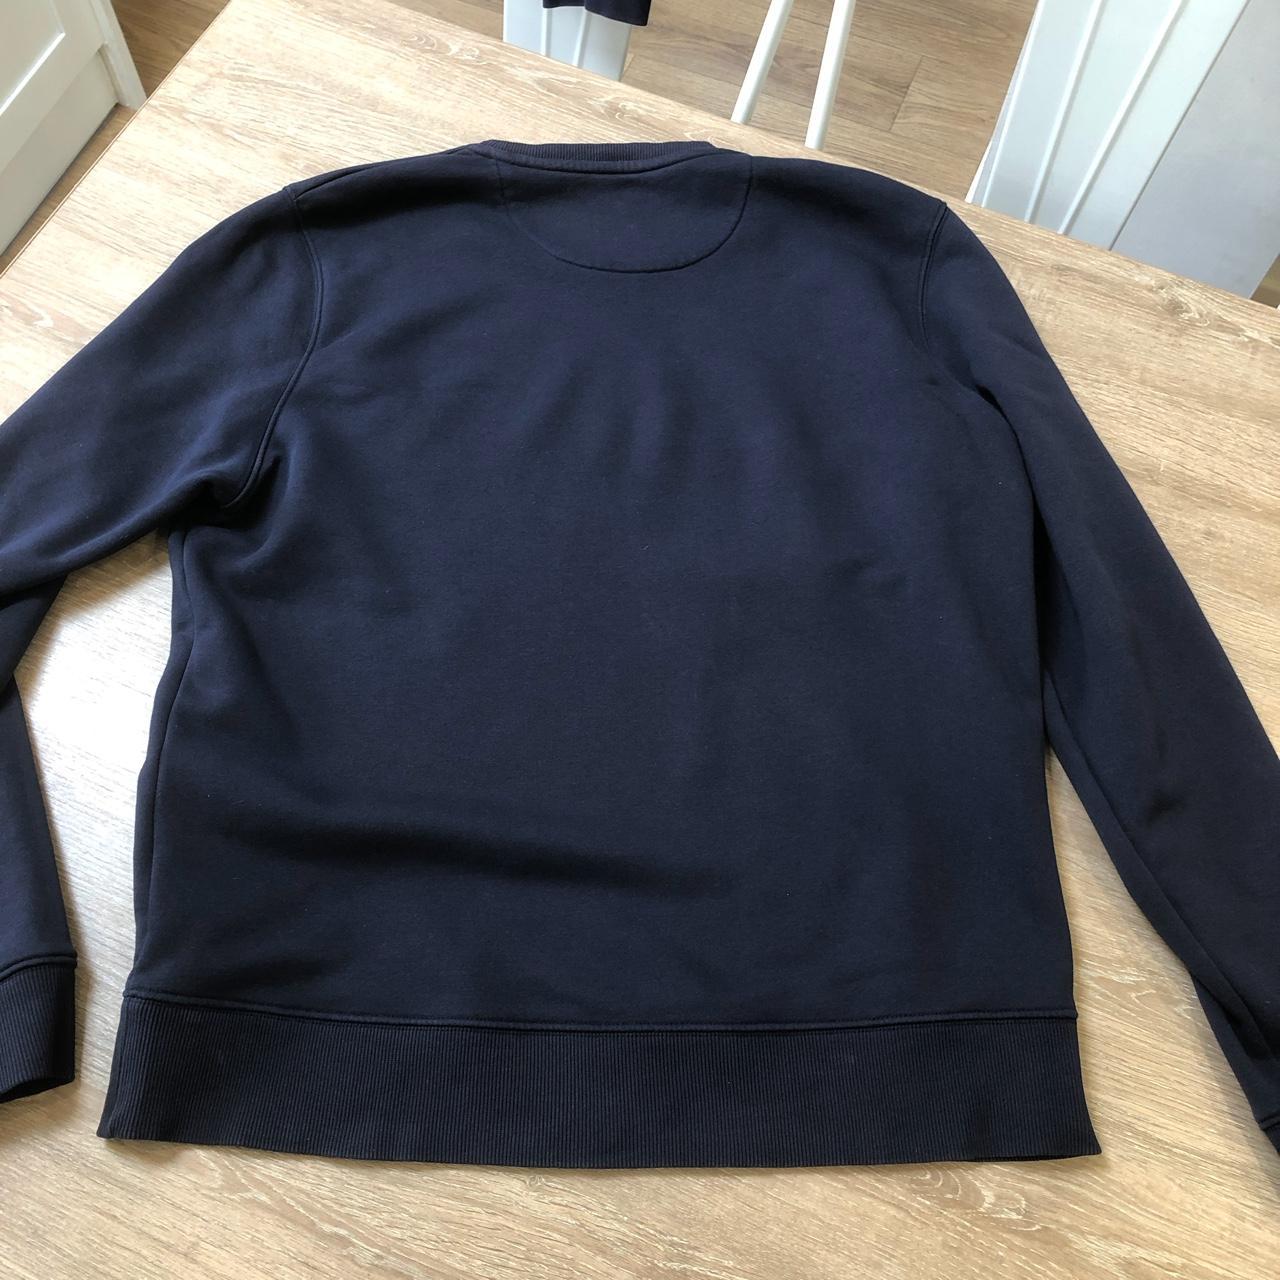 Gant Medium Shield Blue Sweatshirt, Size XXL. This... - Depop